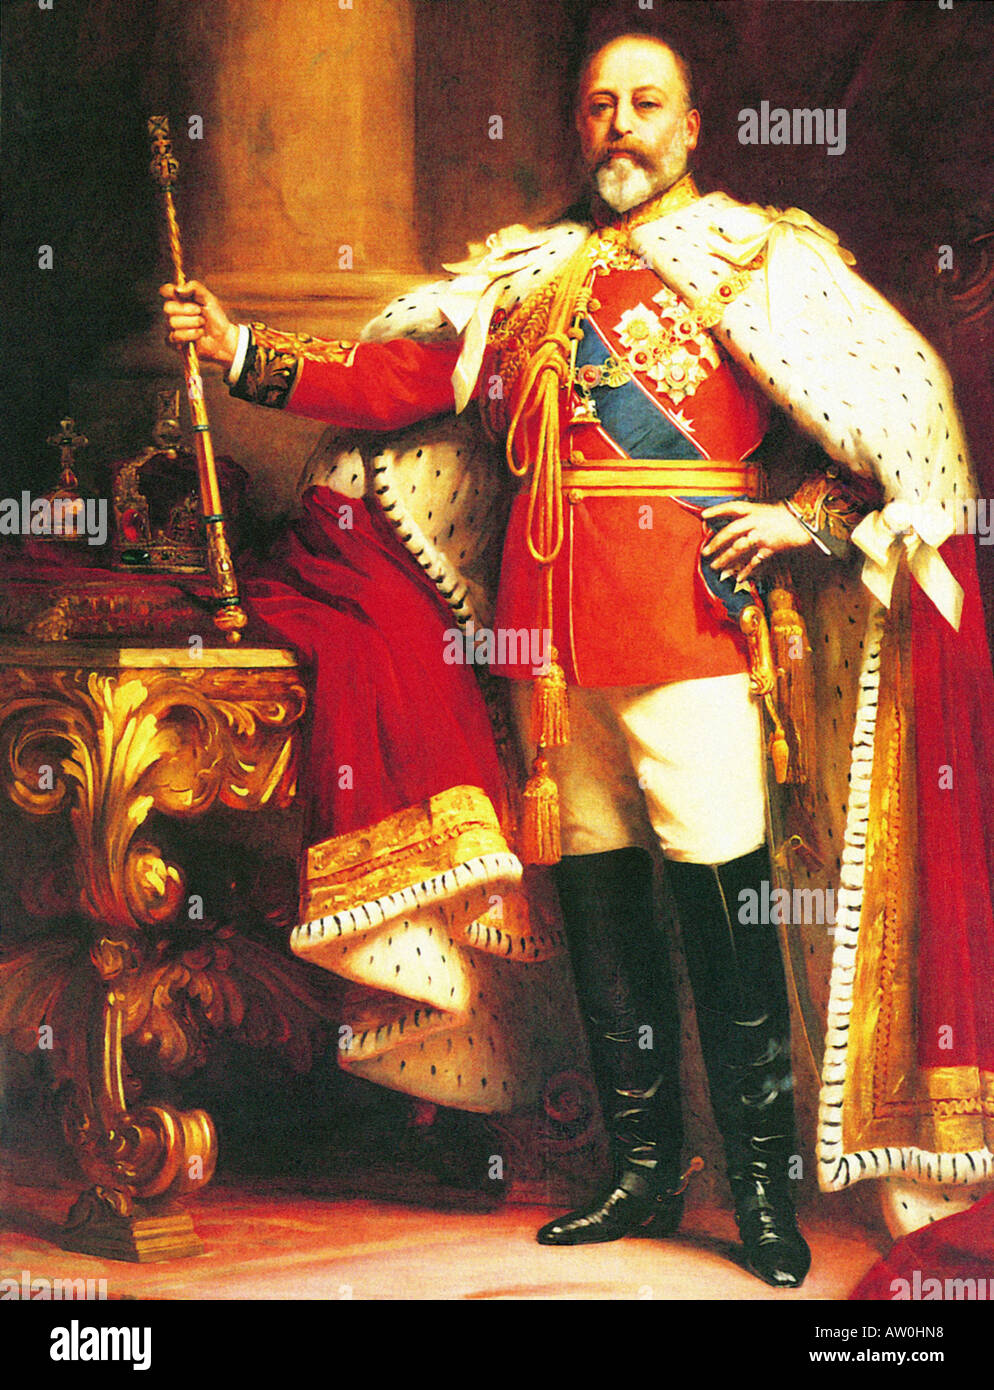 El Rey Eduardo VIII de Gran Bretaña Foto de stock